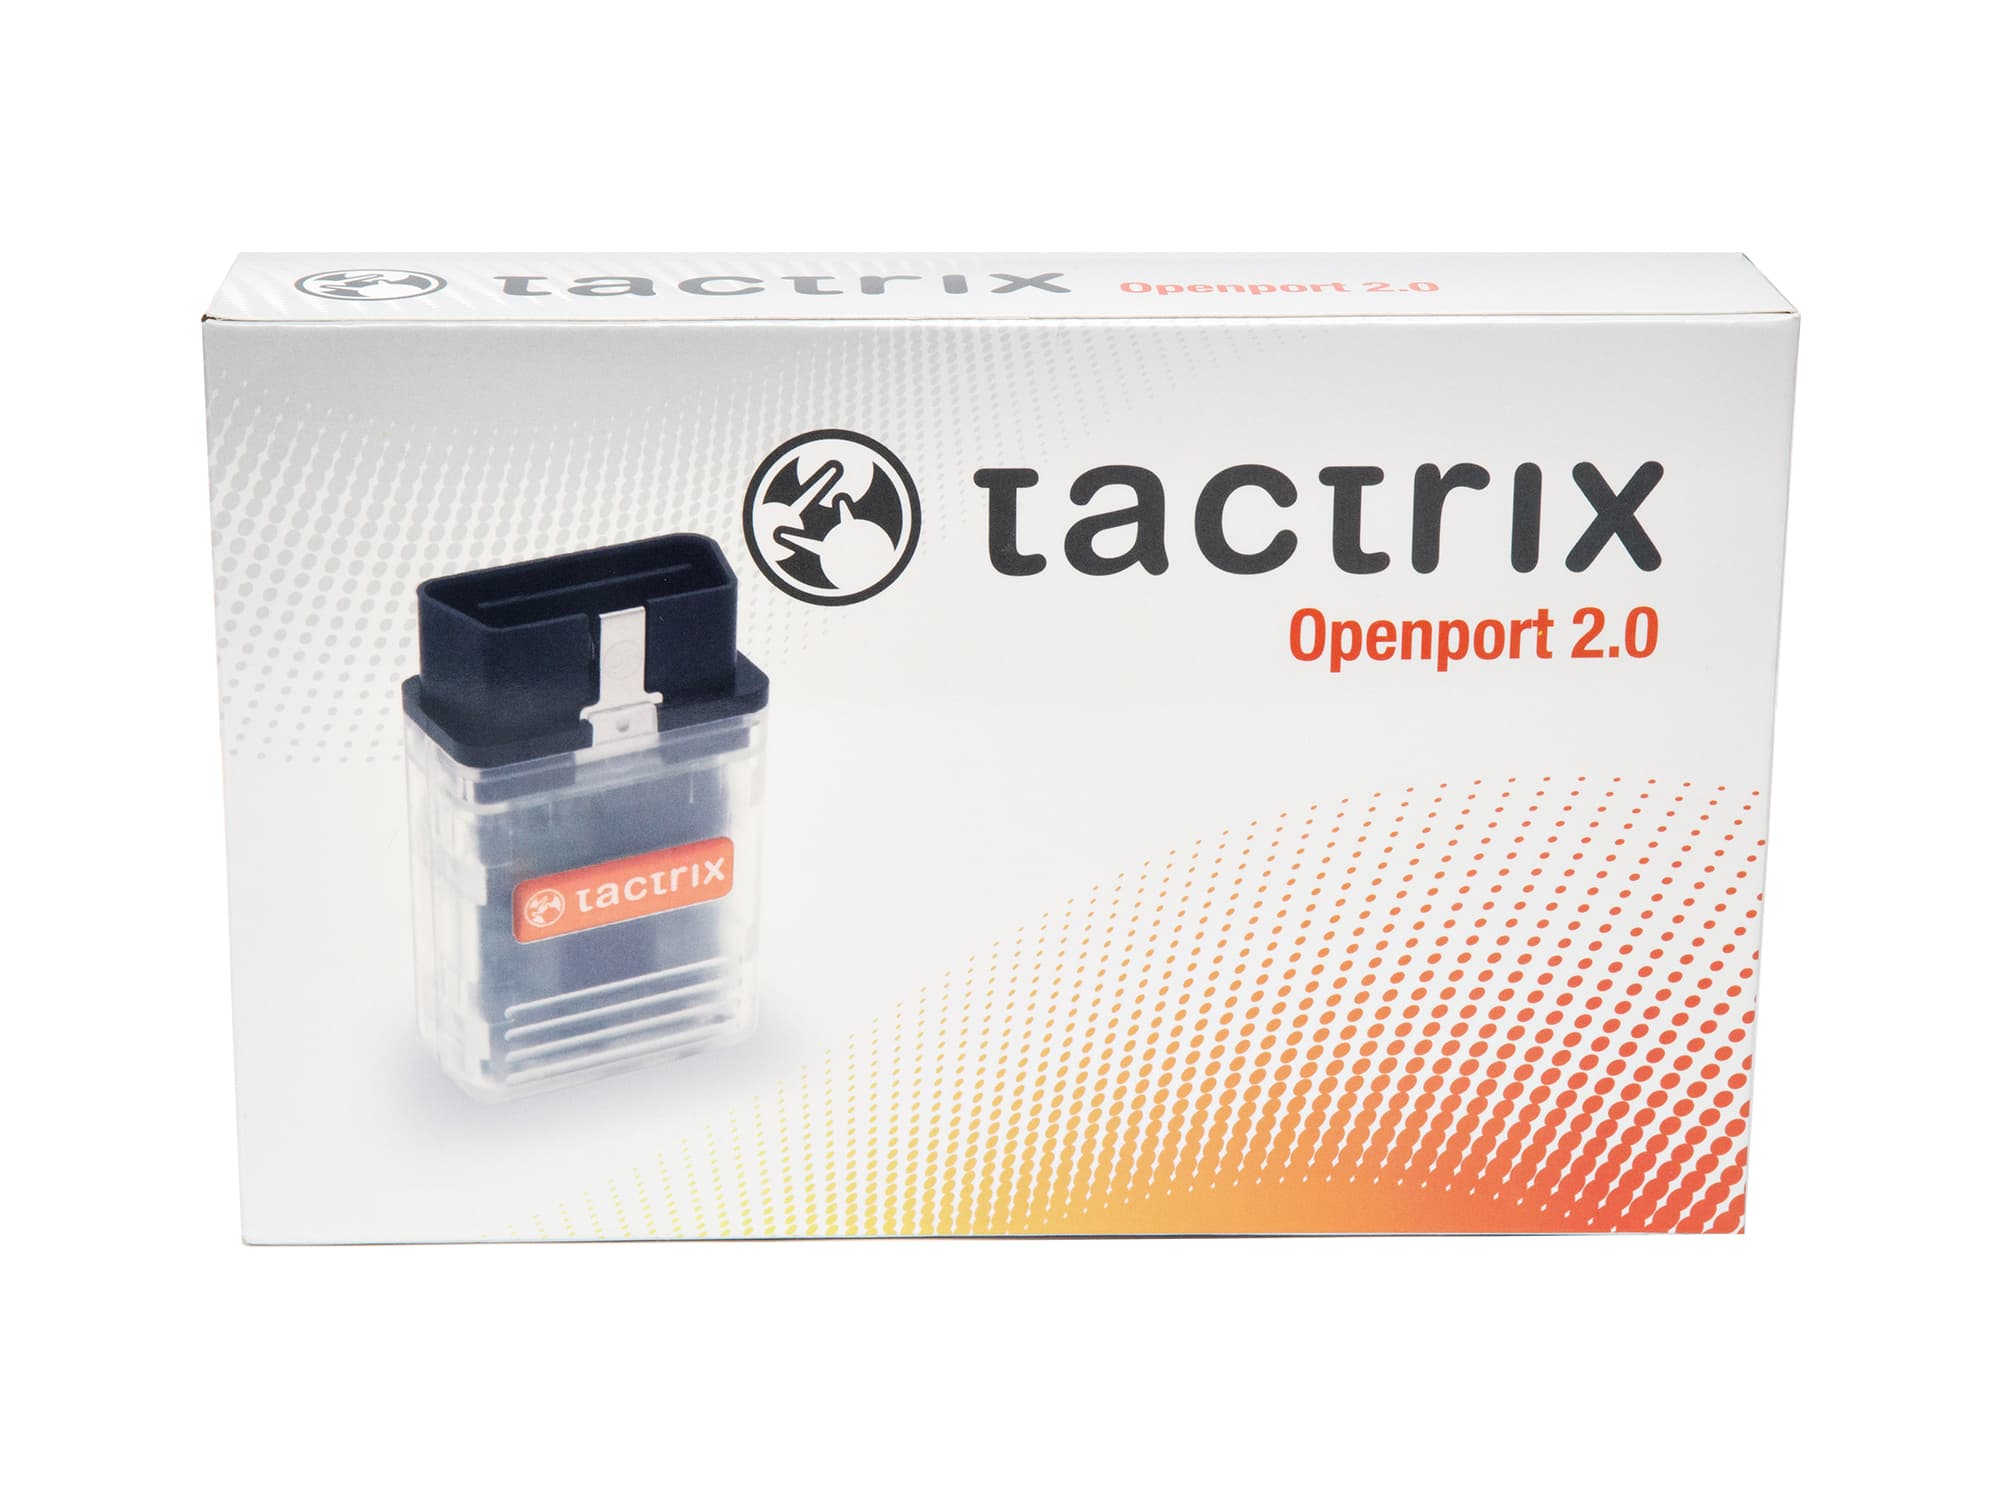 tactrix openport 2.0 clone